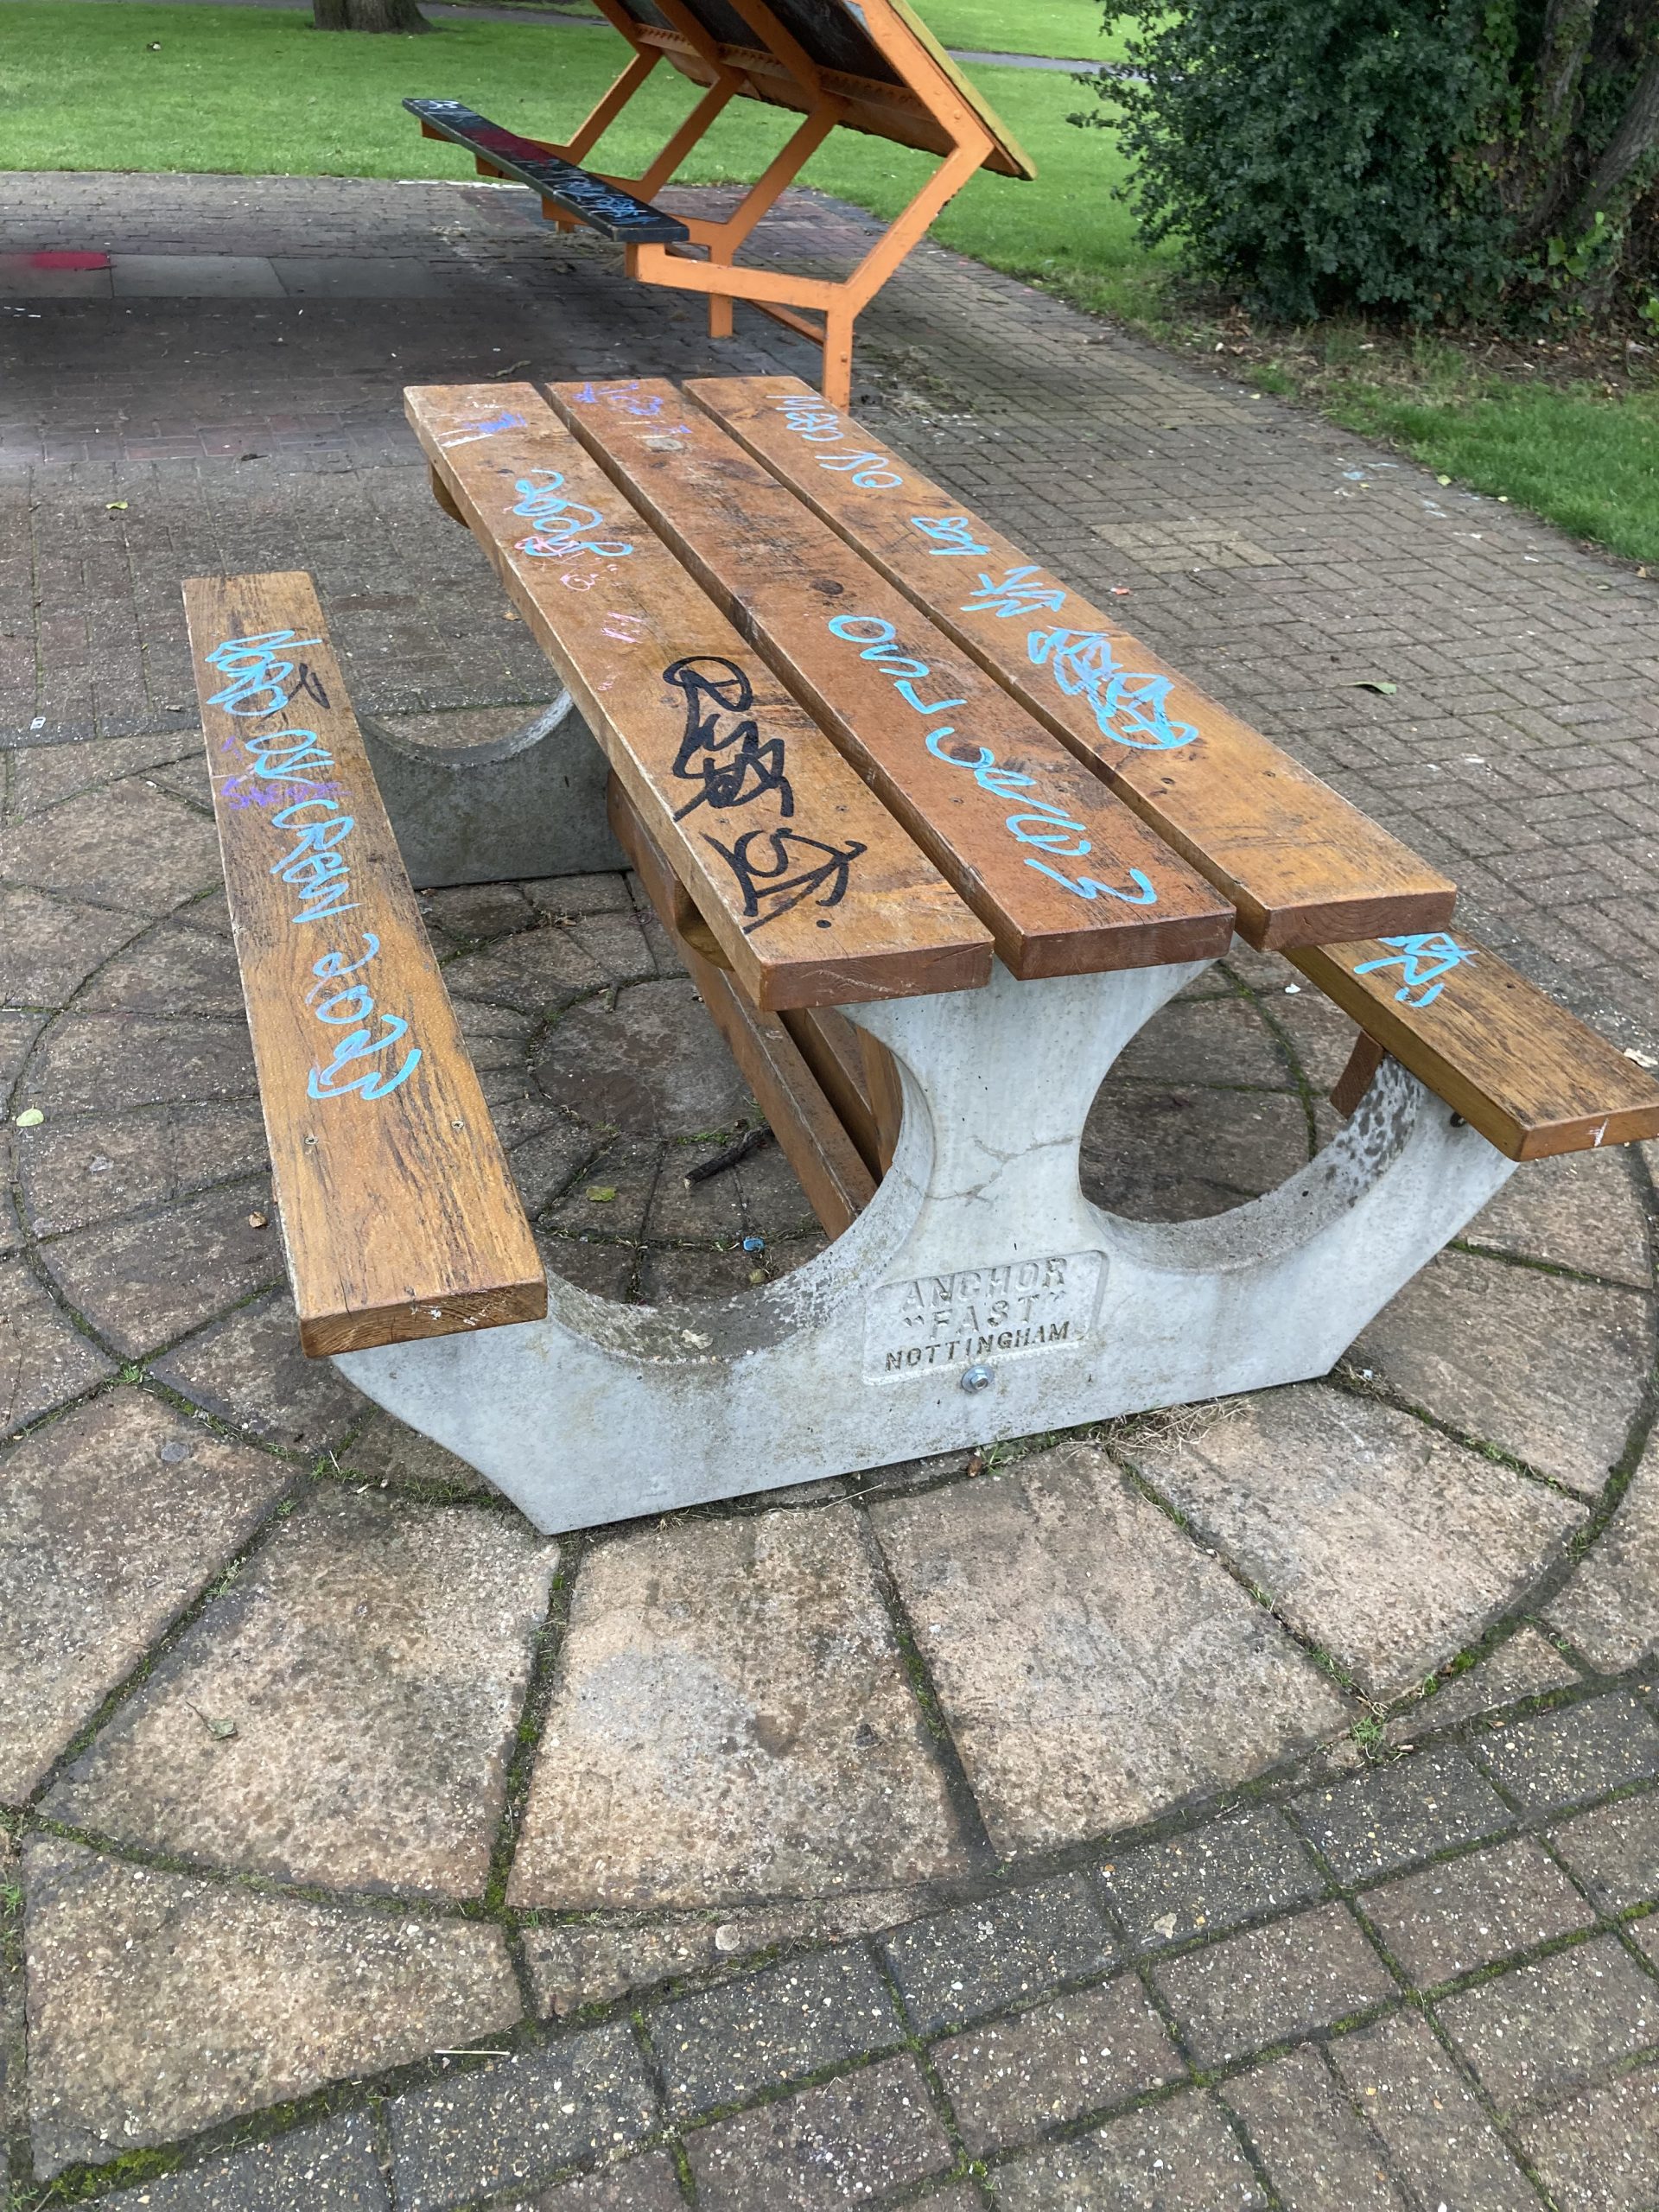 graffiti and anti social behaviour in Woodley